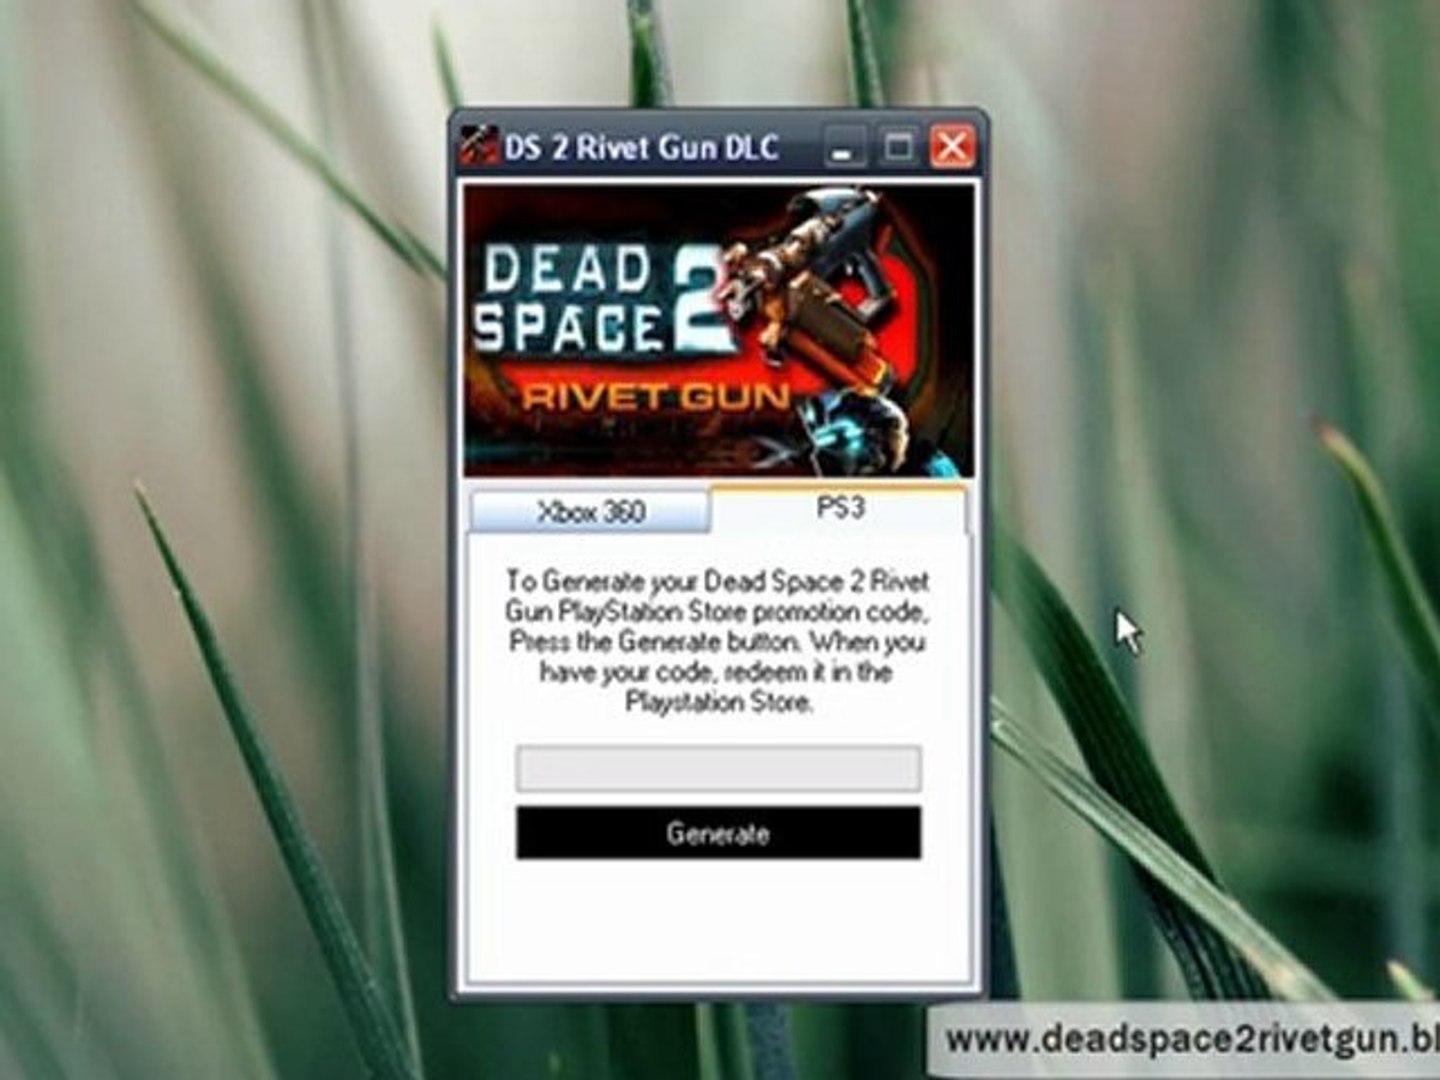 Dead Space 2 Rivet Gun DLC Code for PS3 - Xbox 360 - video Dailymotion